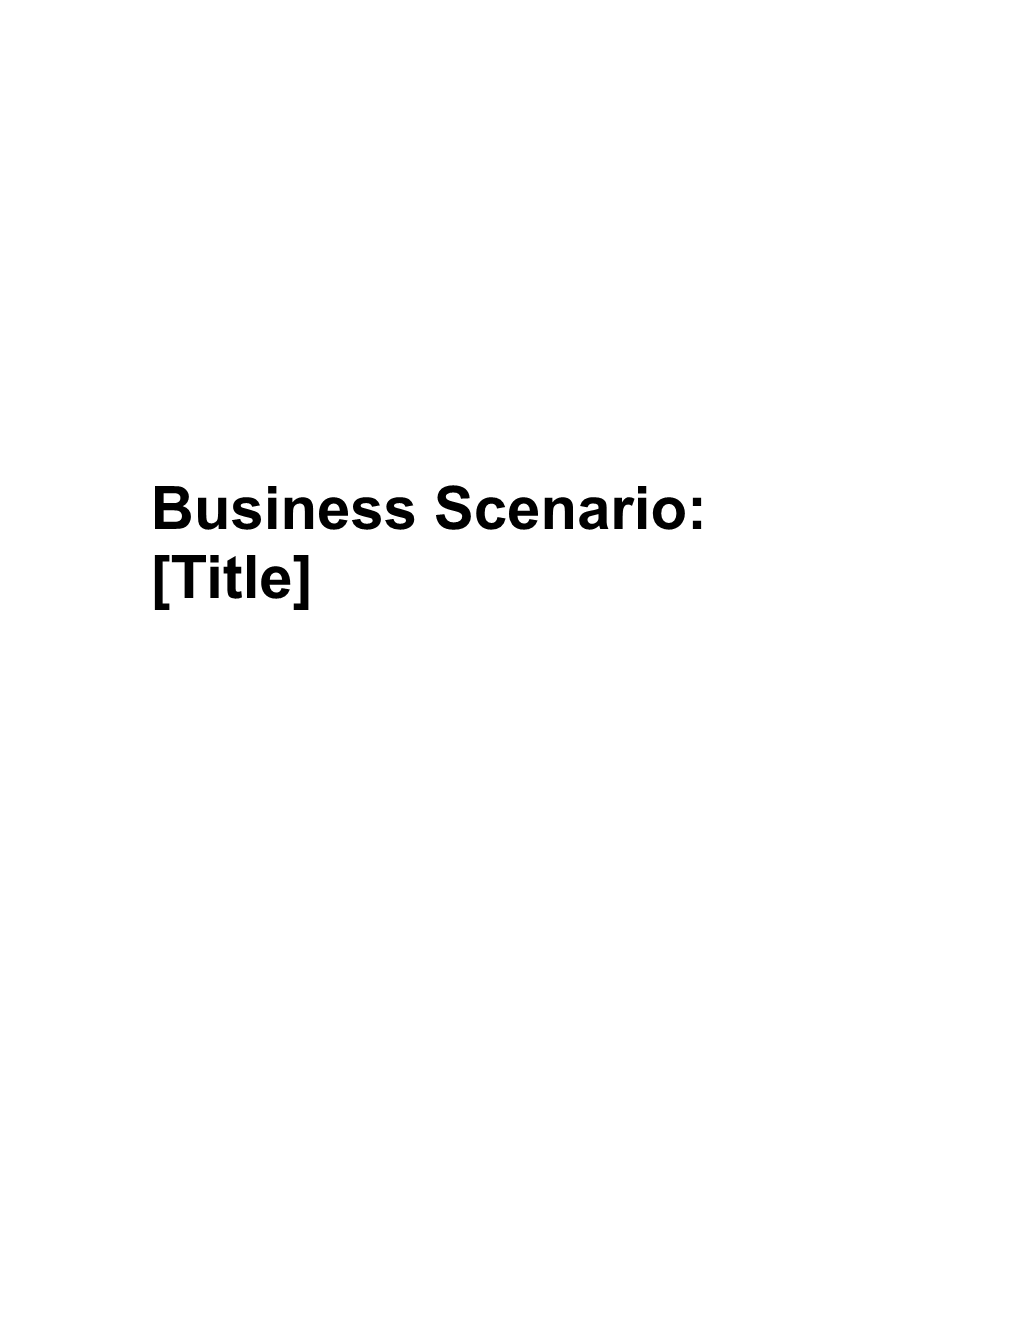 Business Scenarion Template